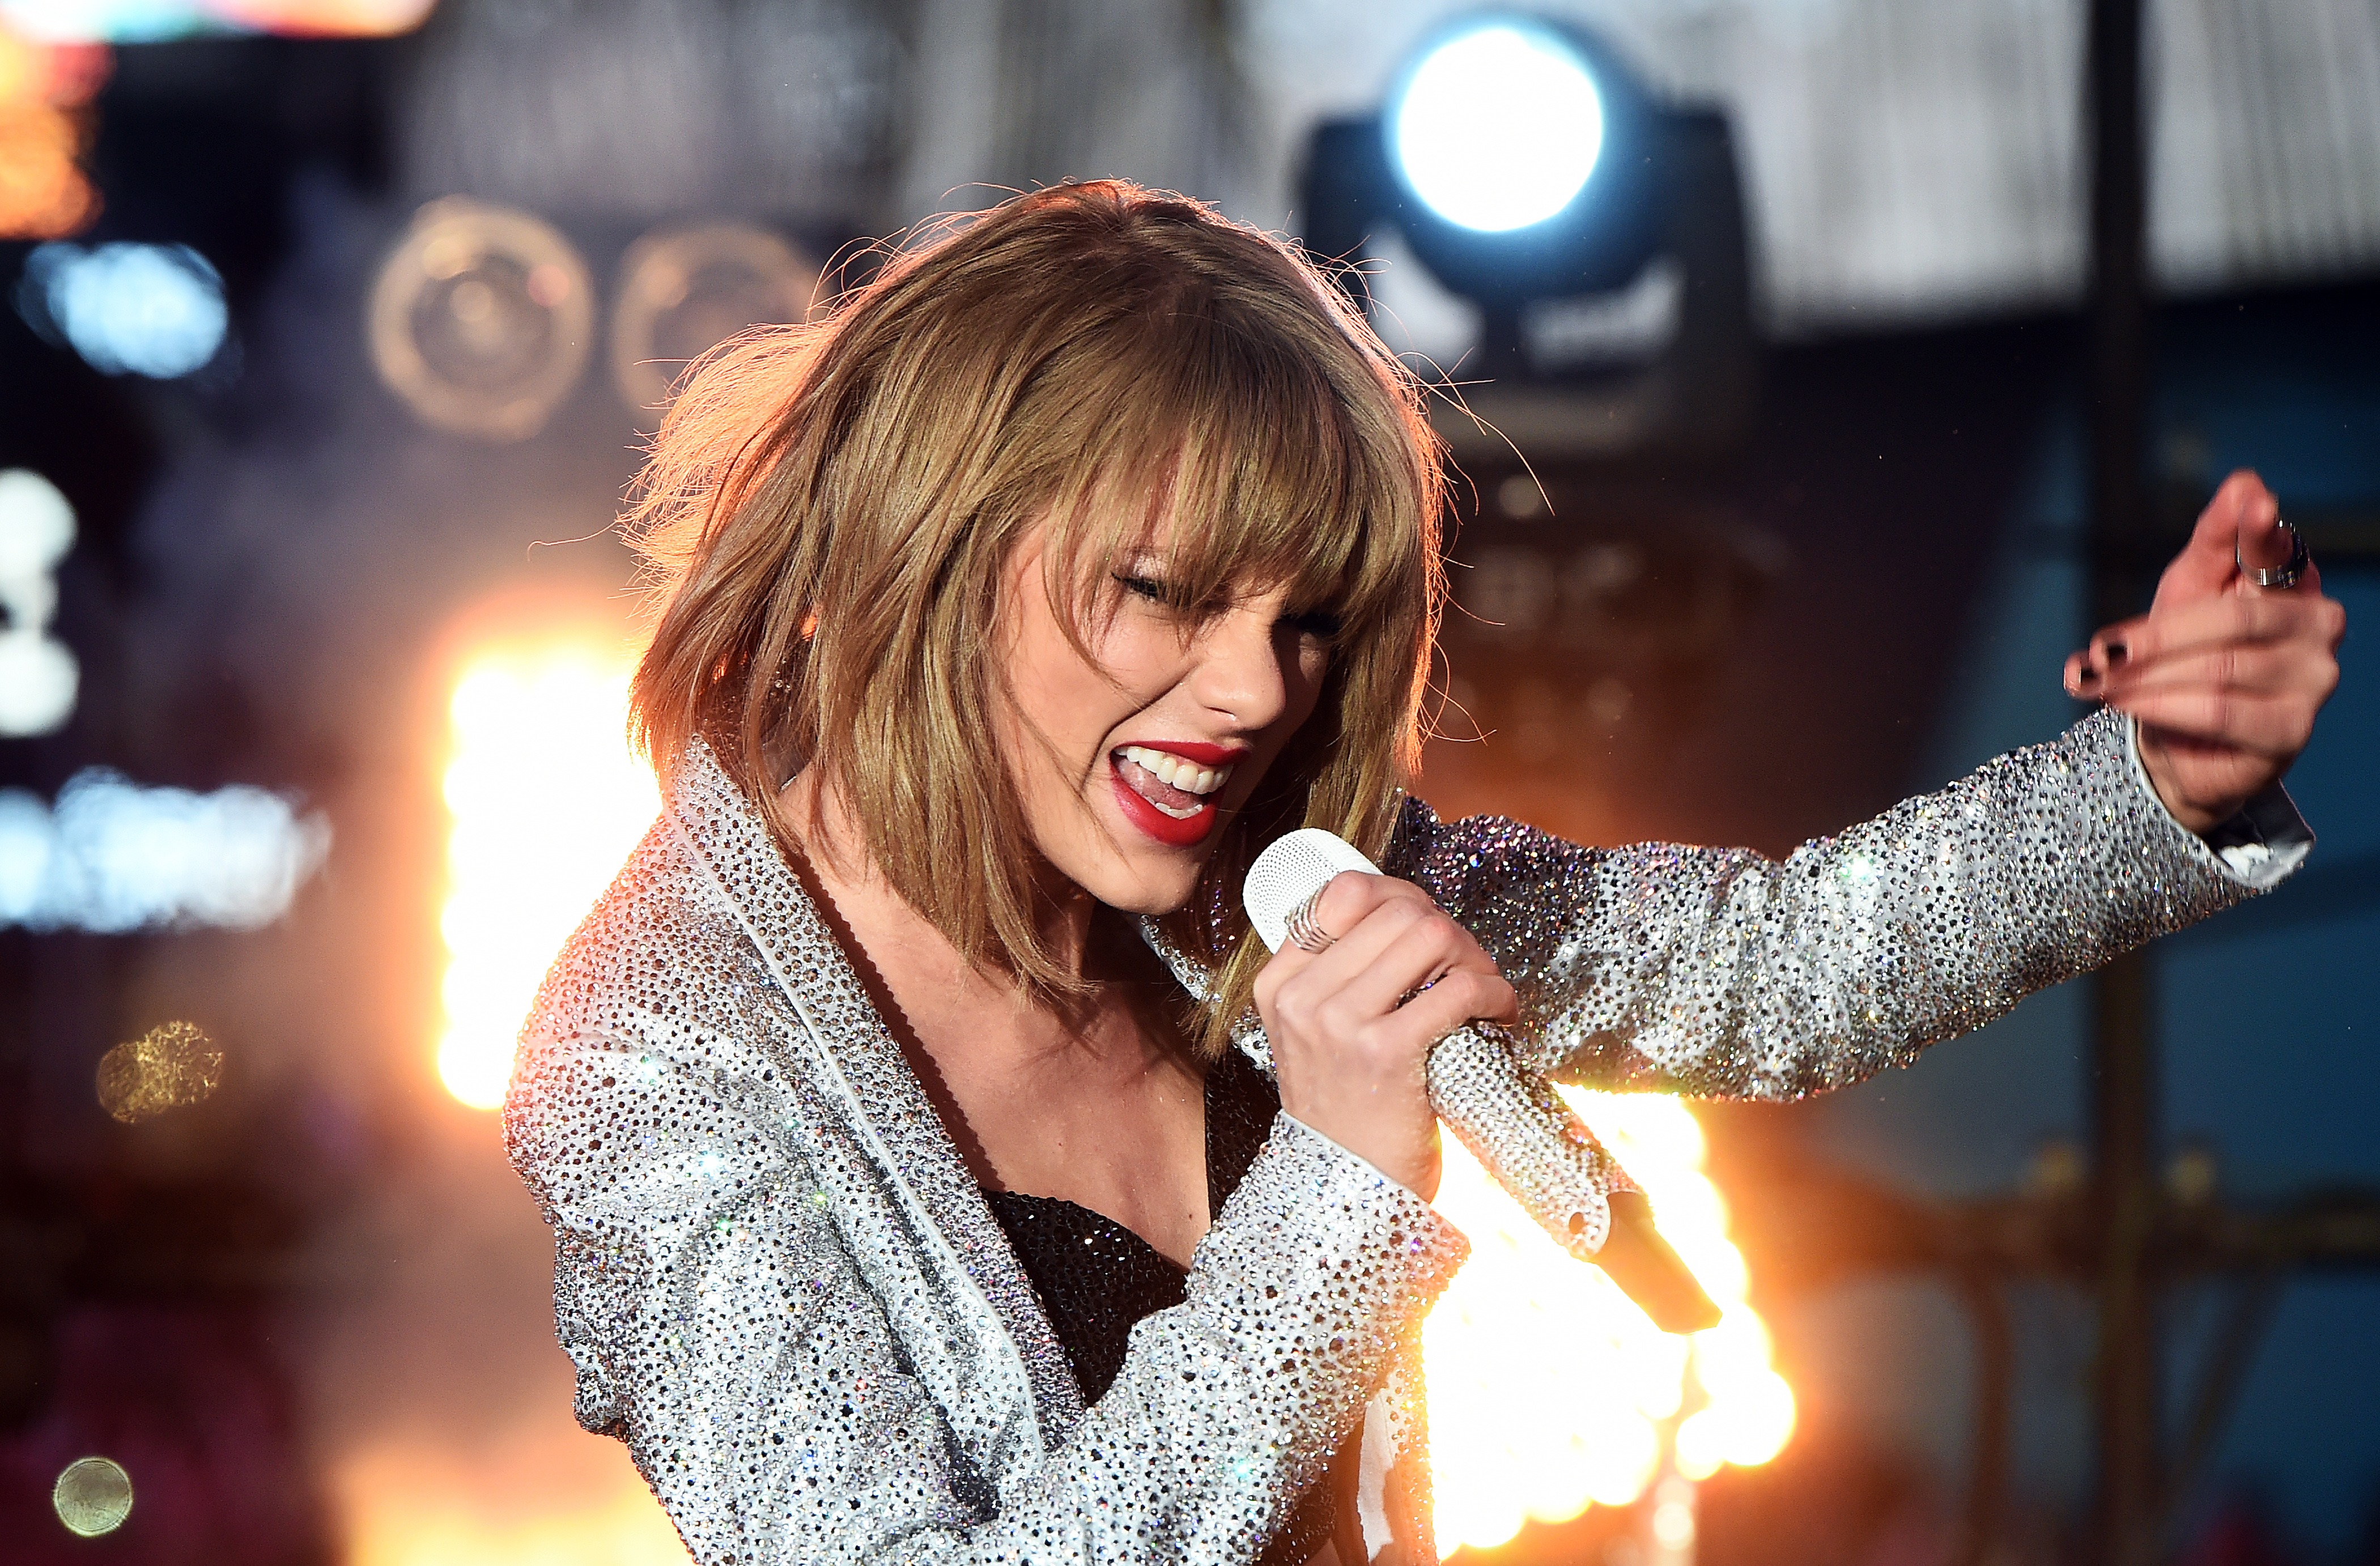 American Blonde Microphone Singer Taylor Swift 4200x2764